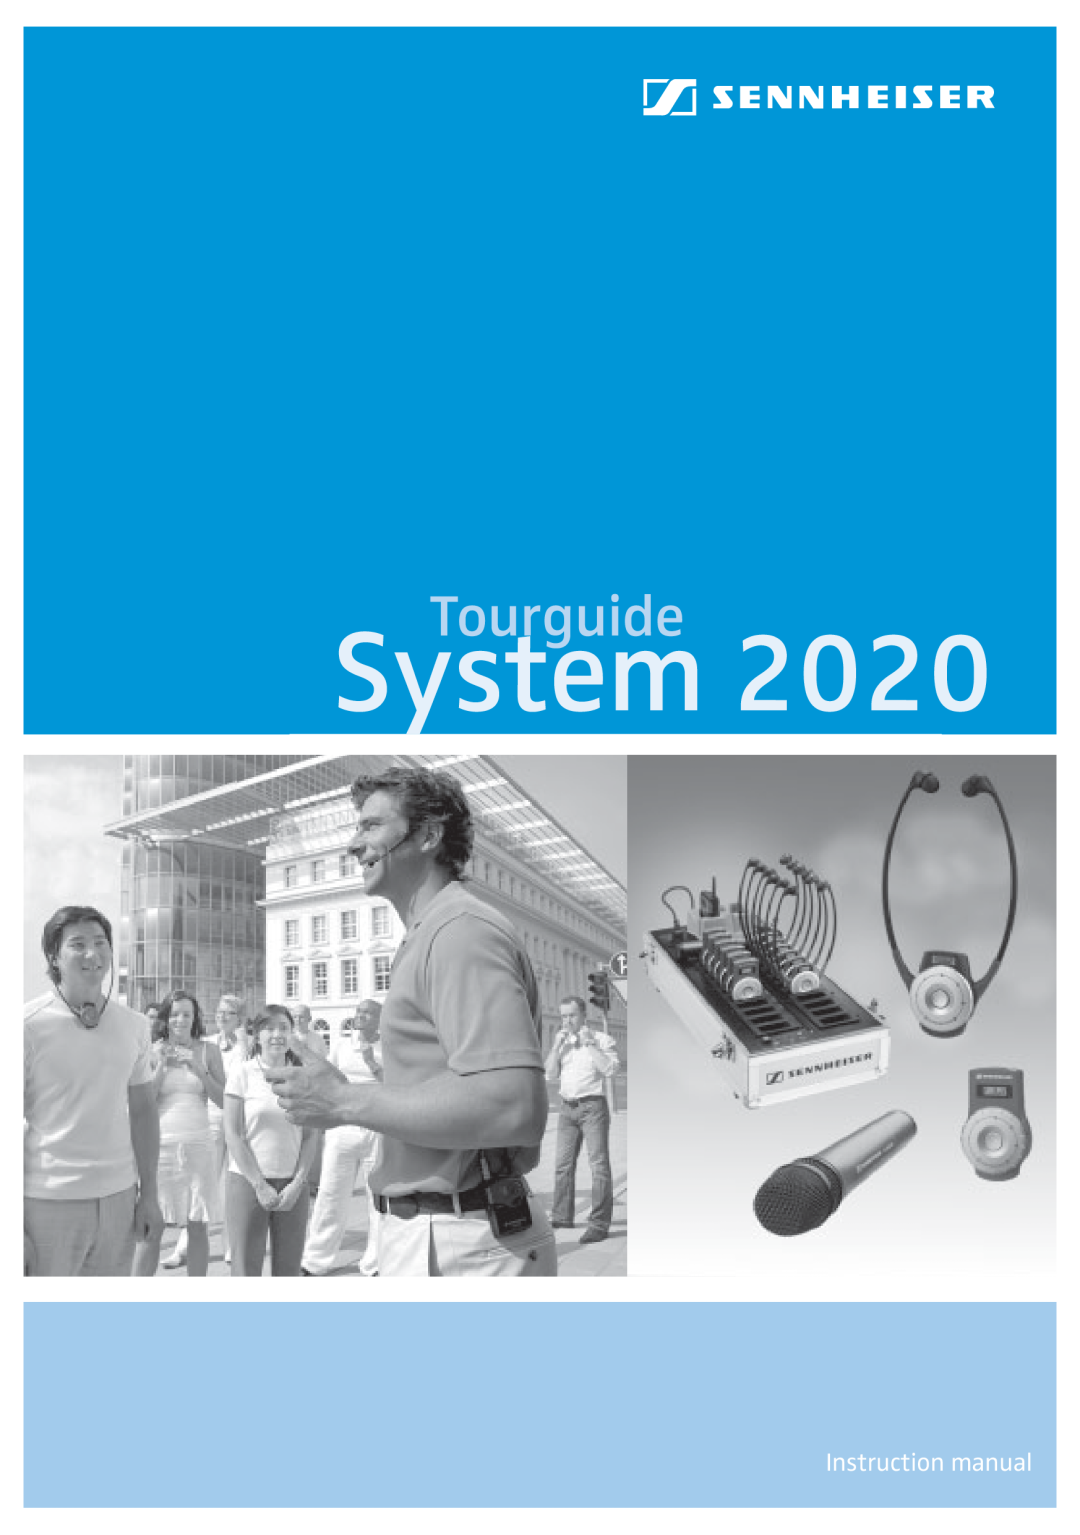 Sennheiser 2020 instruction manual System, Tourguide 